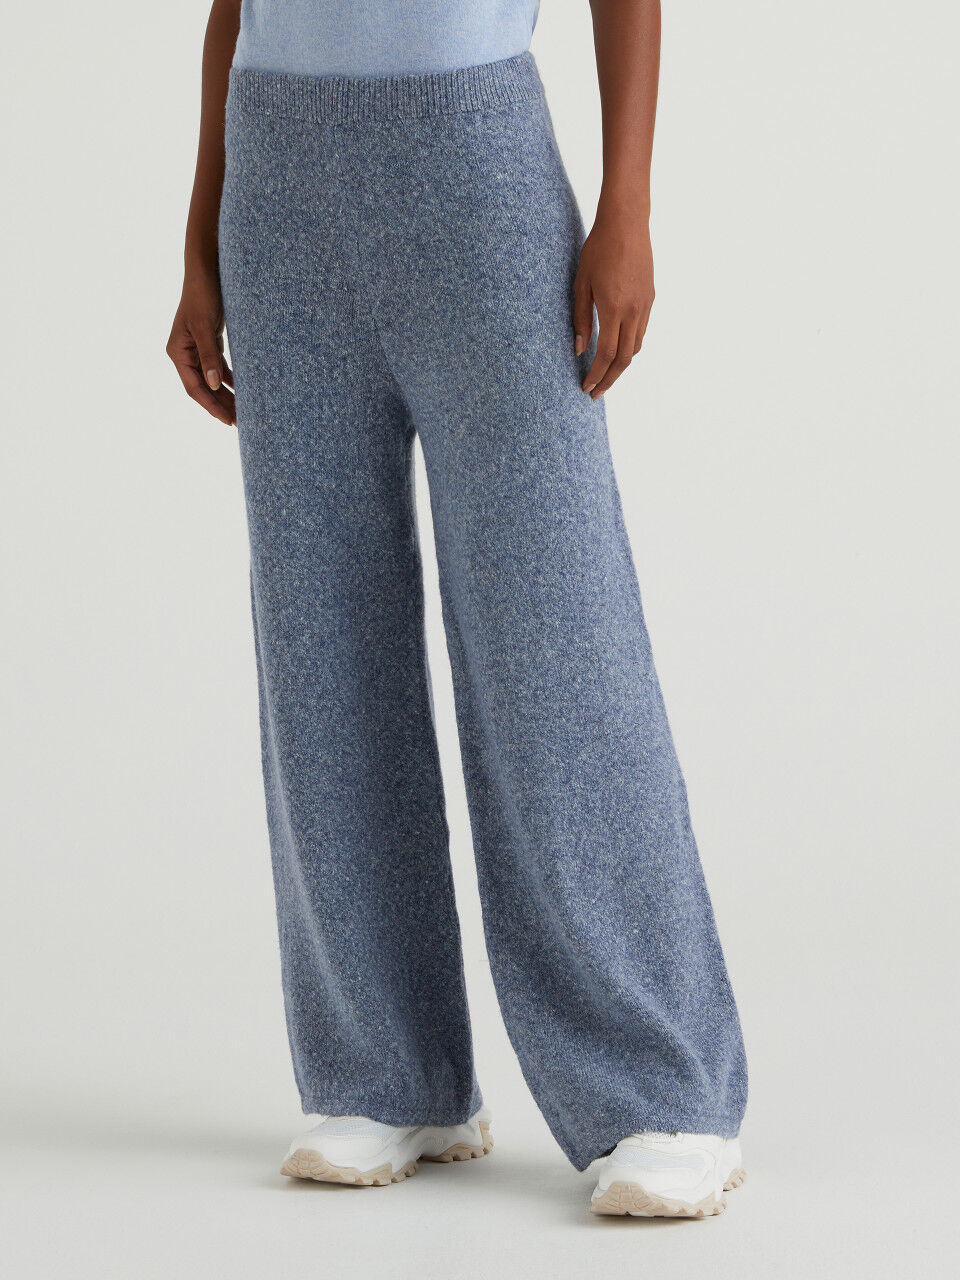 Waitfairy Womens Palazzo Pants Wide Leg Knit Pants Flowy Sweater Pants Navy  Sea XS/S at Amazon Women's Clothing store